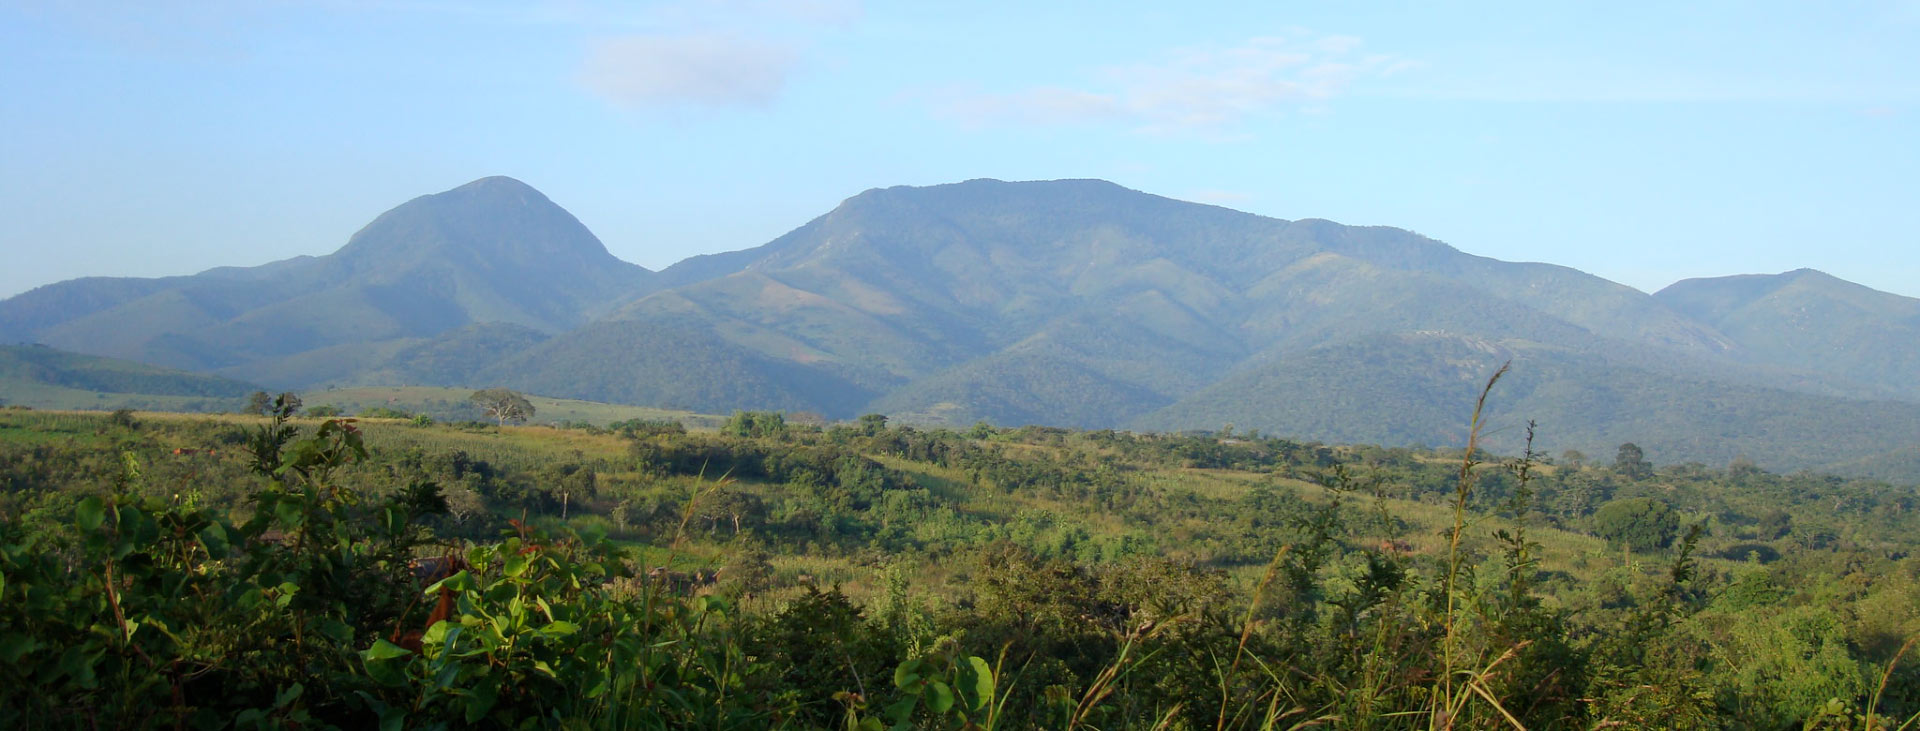 The Luhombero Peak, Udzungwa Mountains